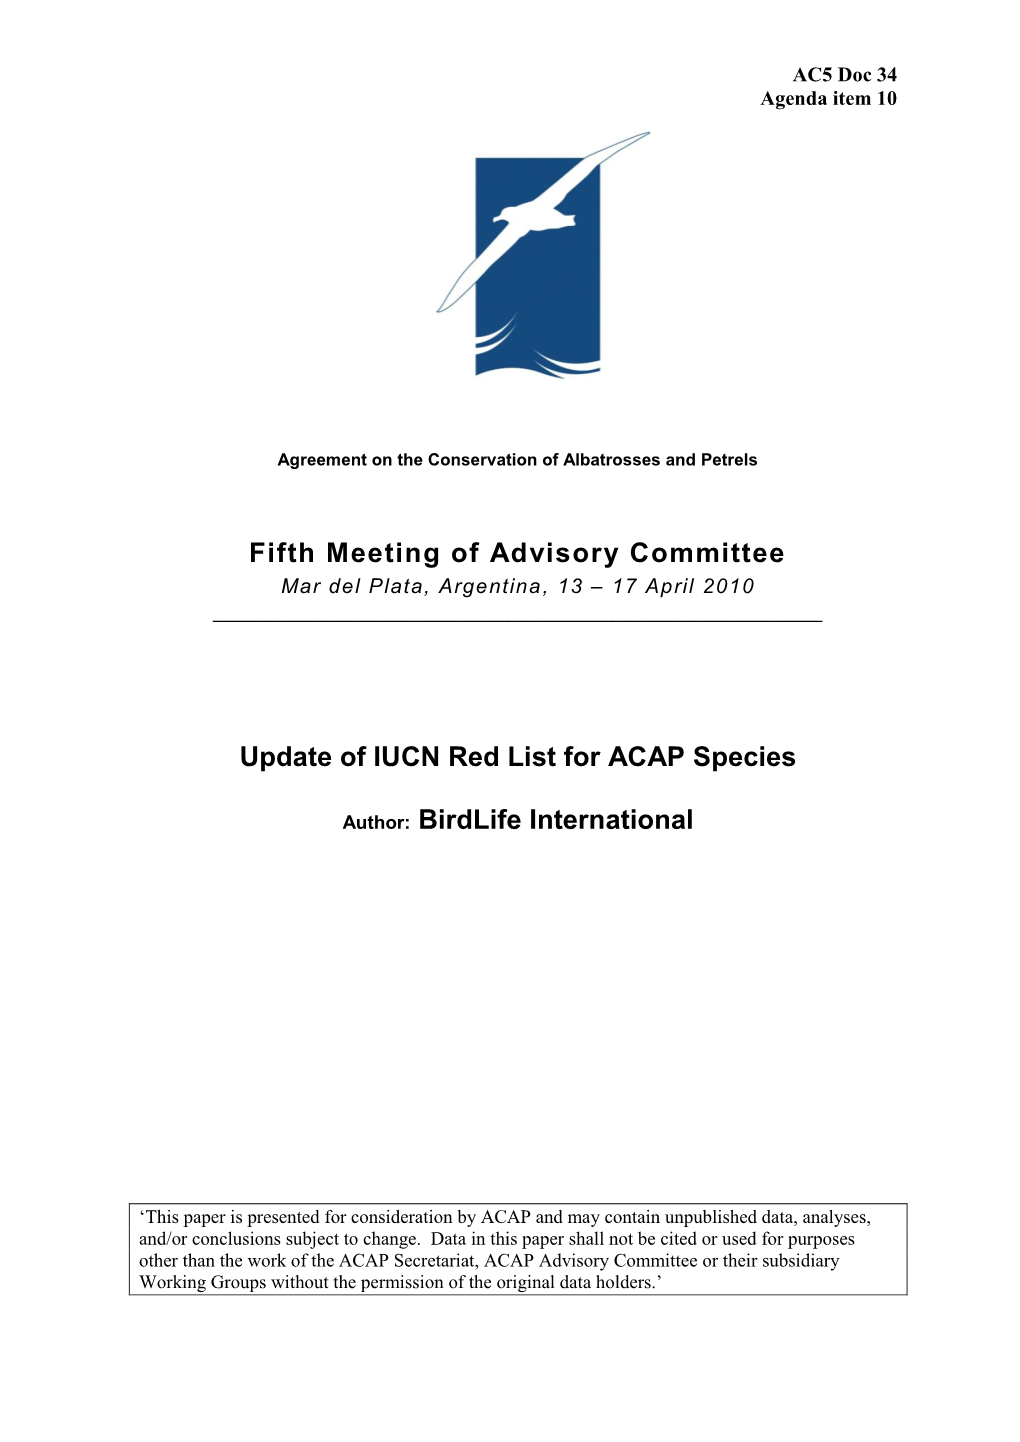 Update of IUCN Red List for ACAP Species